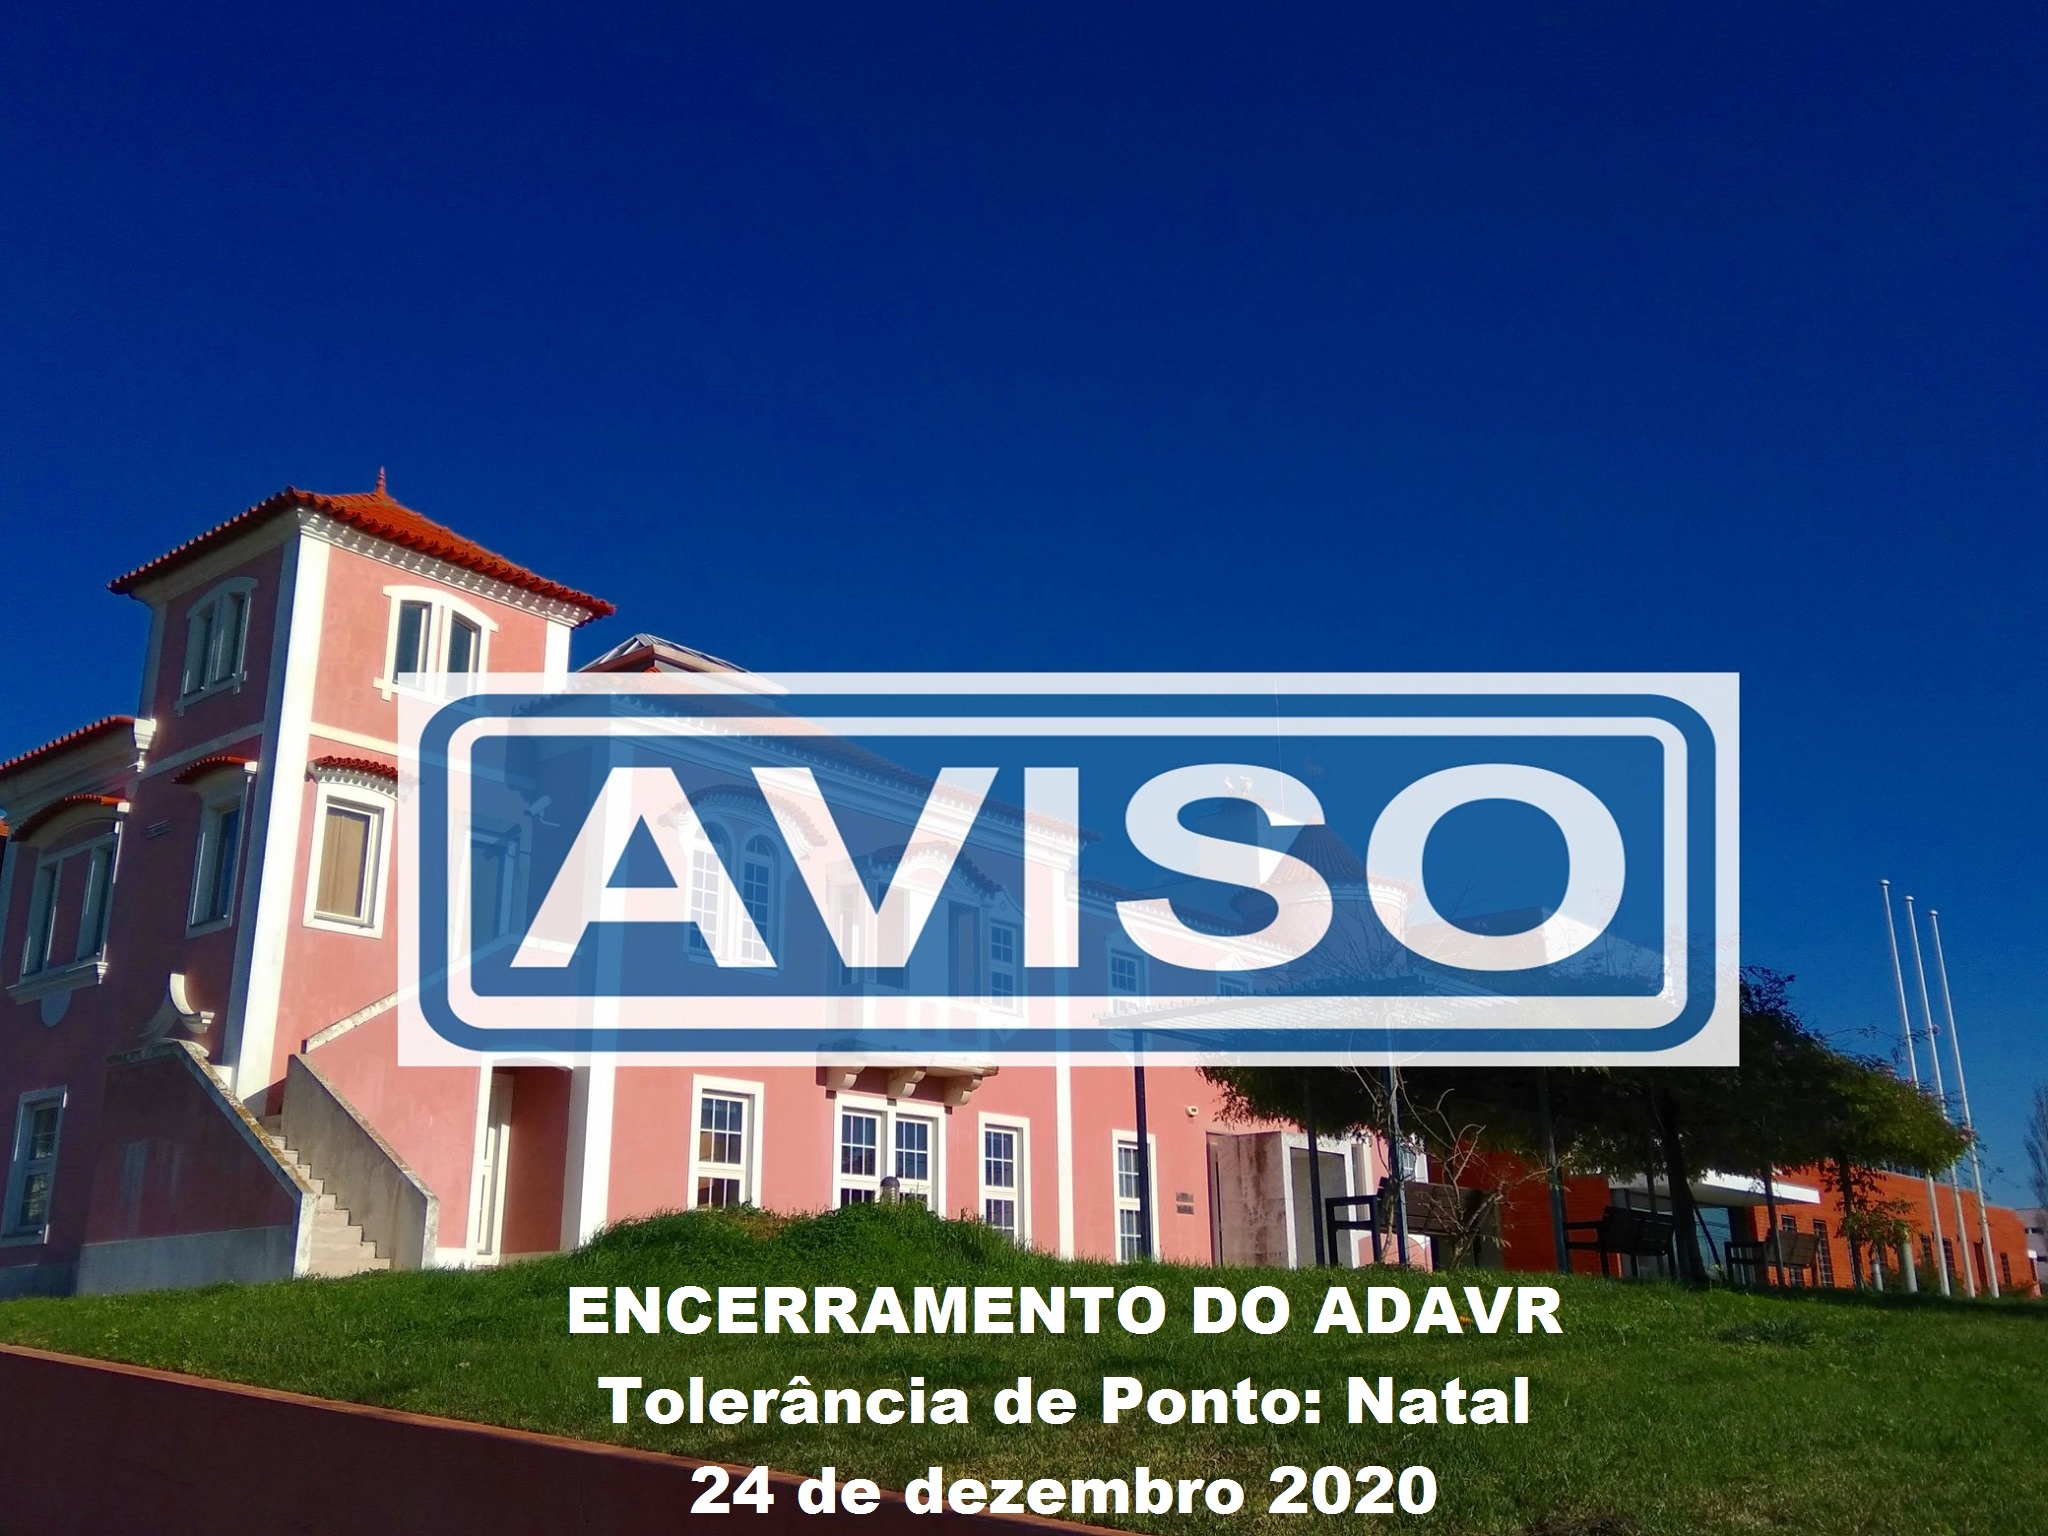 AVISO tolerância de ponto NATAL Arquivo Distrital de Aveiro